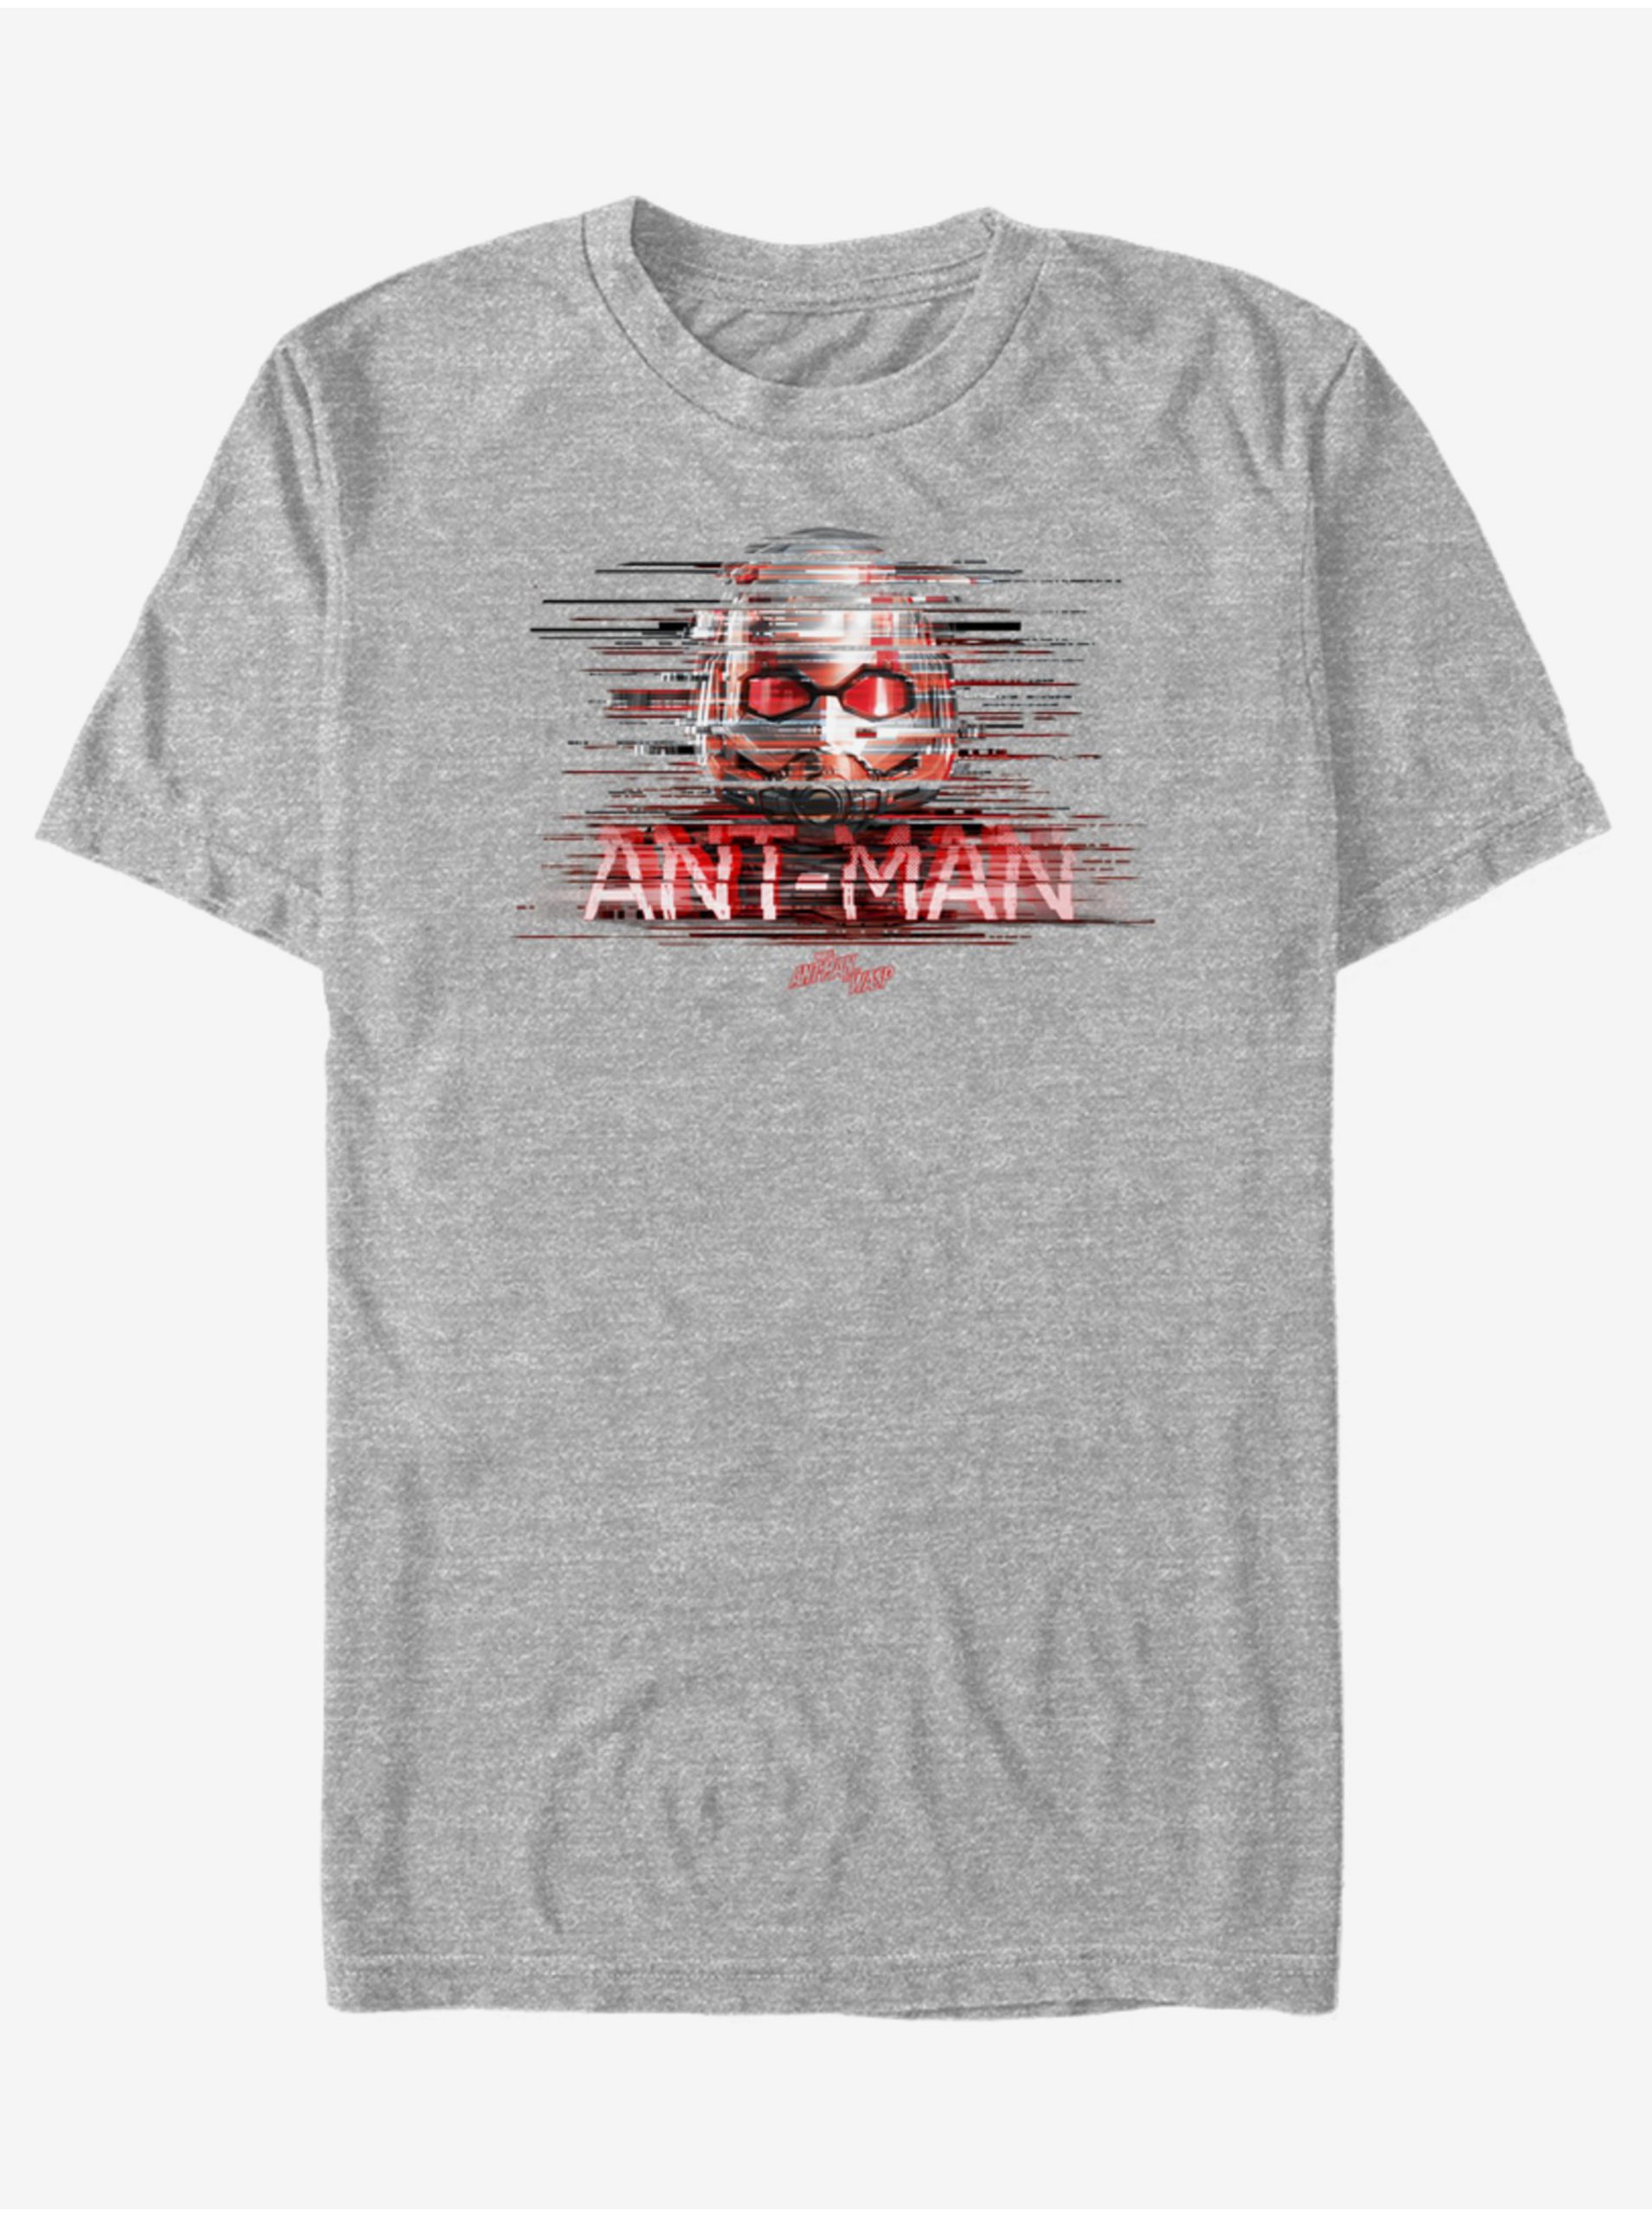 Lacno Ant-Man and The Wasp ZOOT. FAN Marvel - unisex tričko